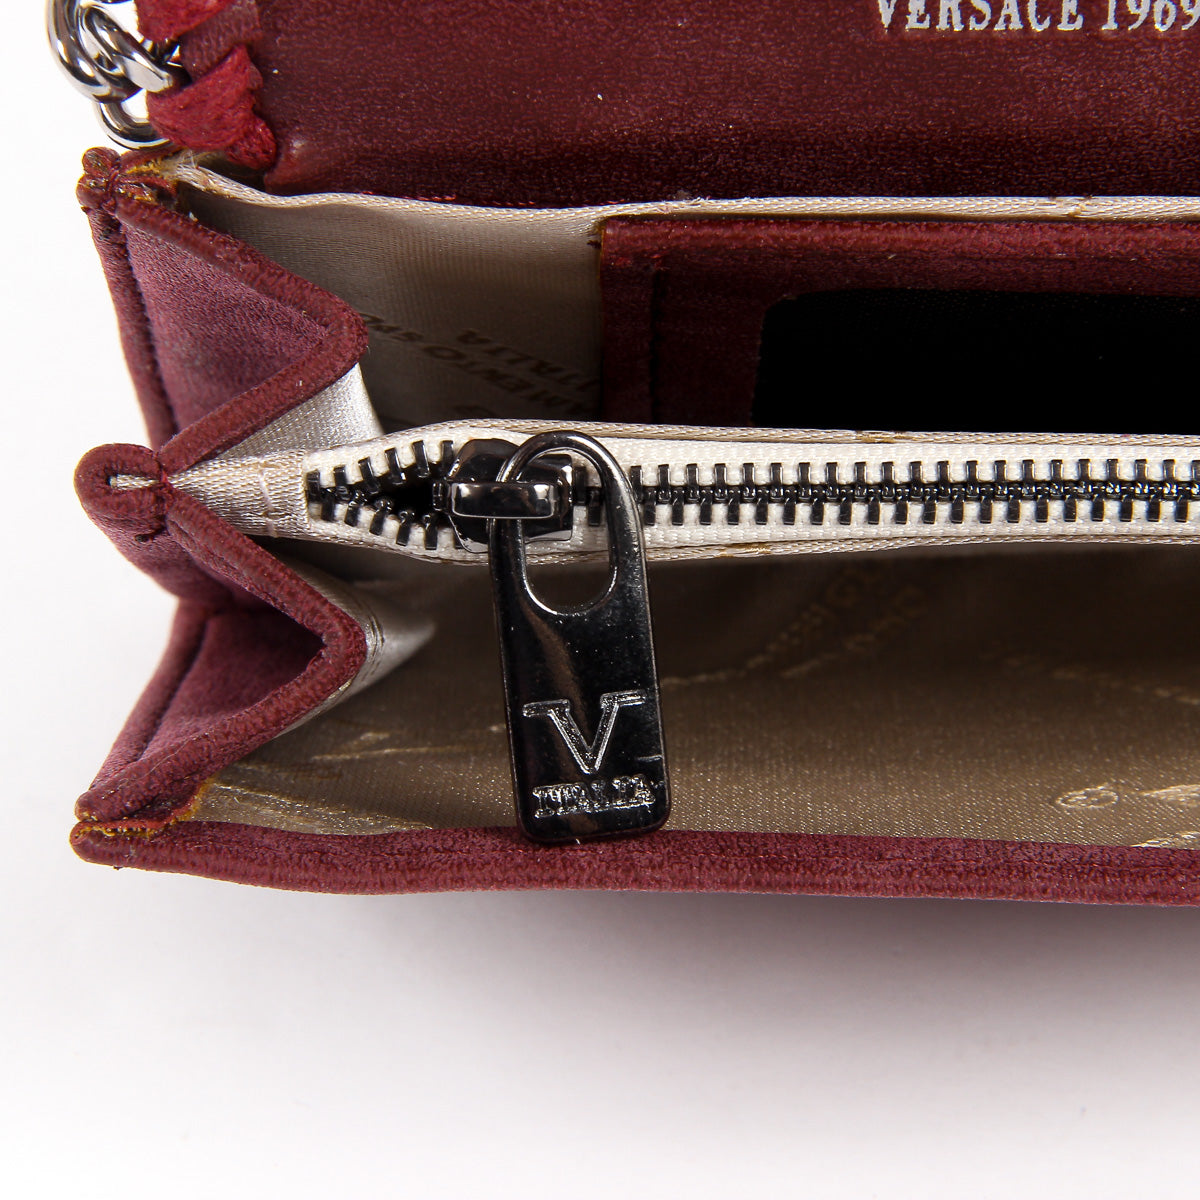 V Italia Versace 1969 Metallic leather shoulder handbag silver made in  Italy | eBay